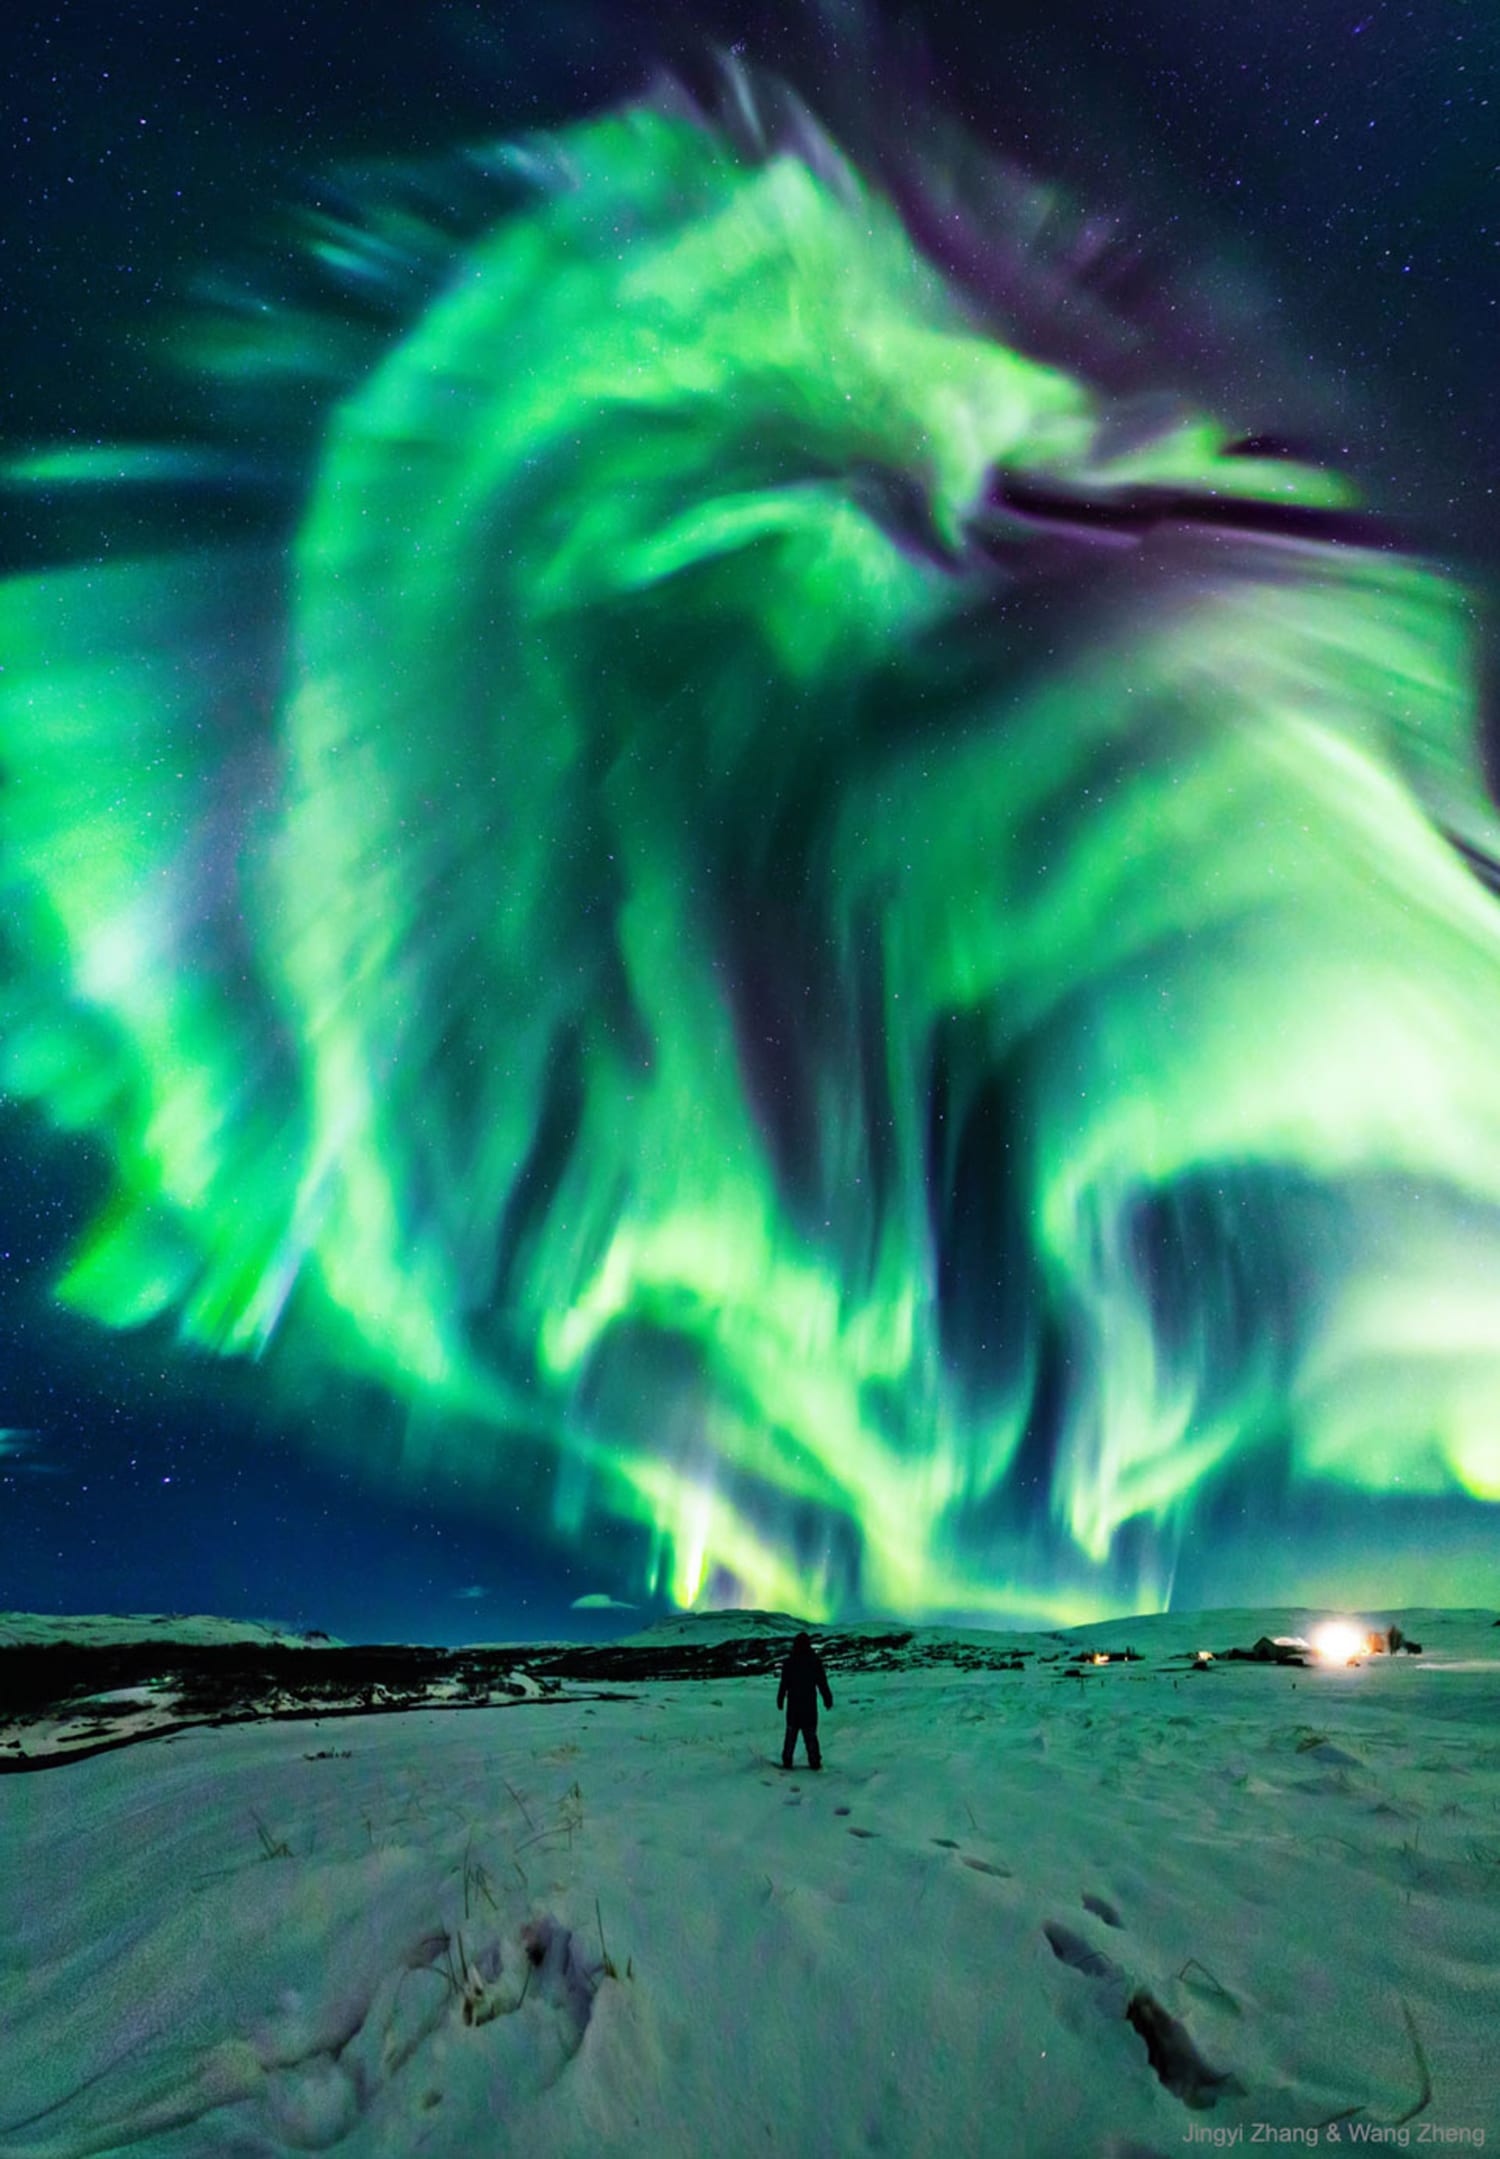 Dragon Aurora Dancing Over Iceland Captured In Stunning Photo - roblox dragon adventures ocean dragons